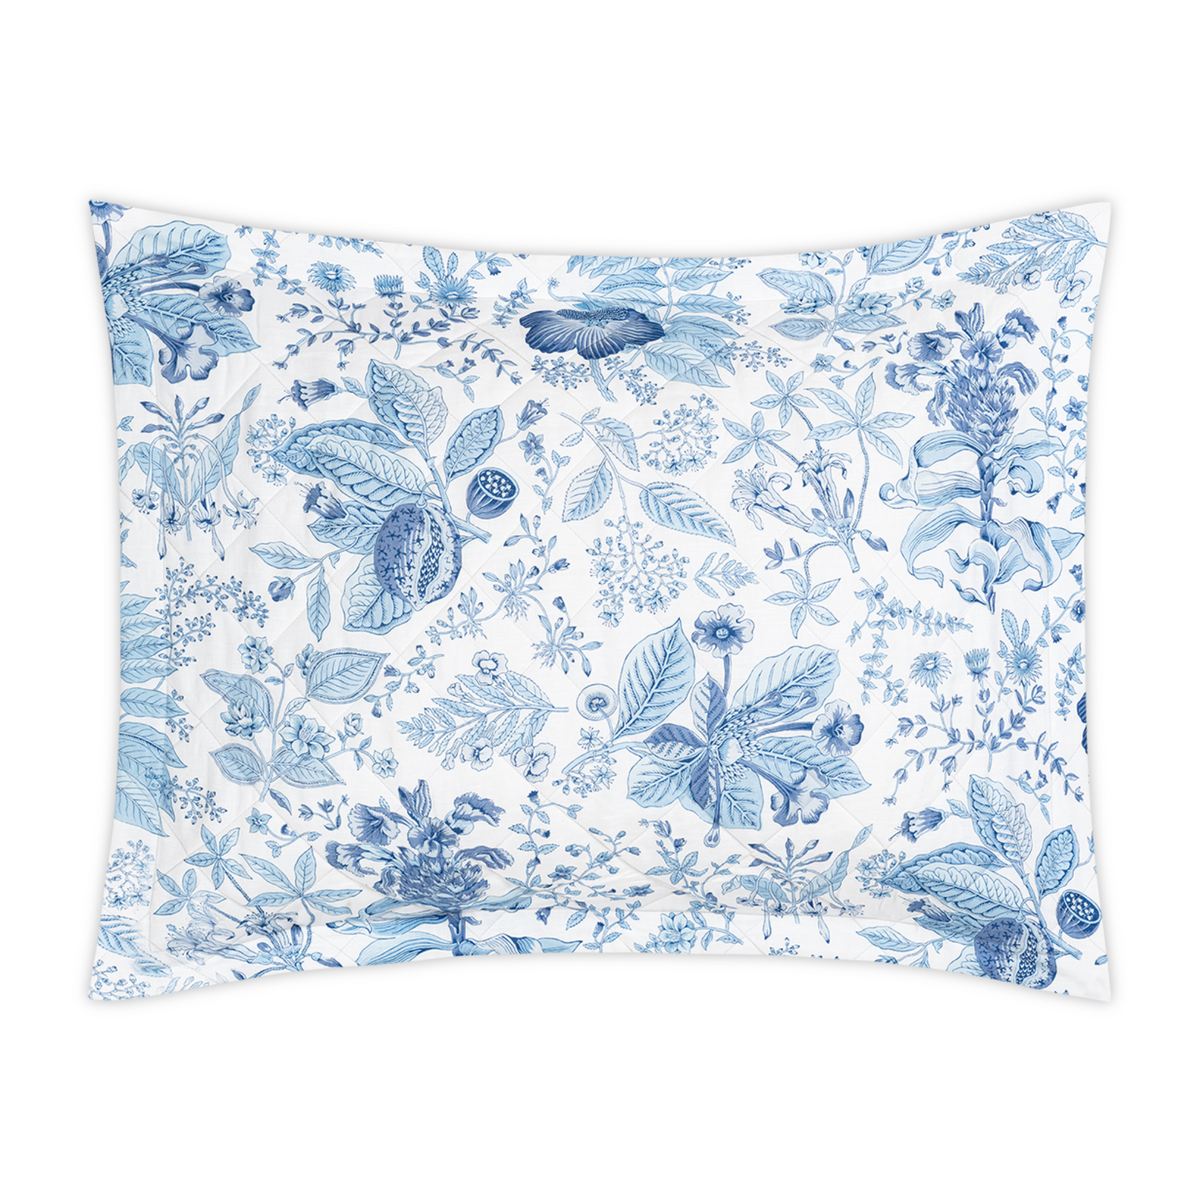 Quilted Sham of Matouk Schumacher Pomegranate Linen Bedding in Porcelain Blue Color